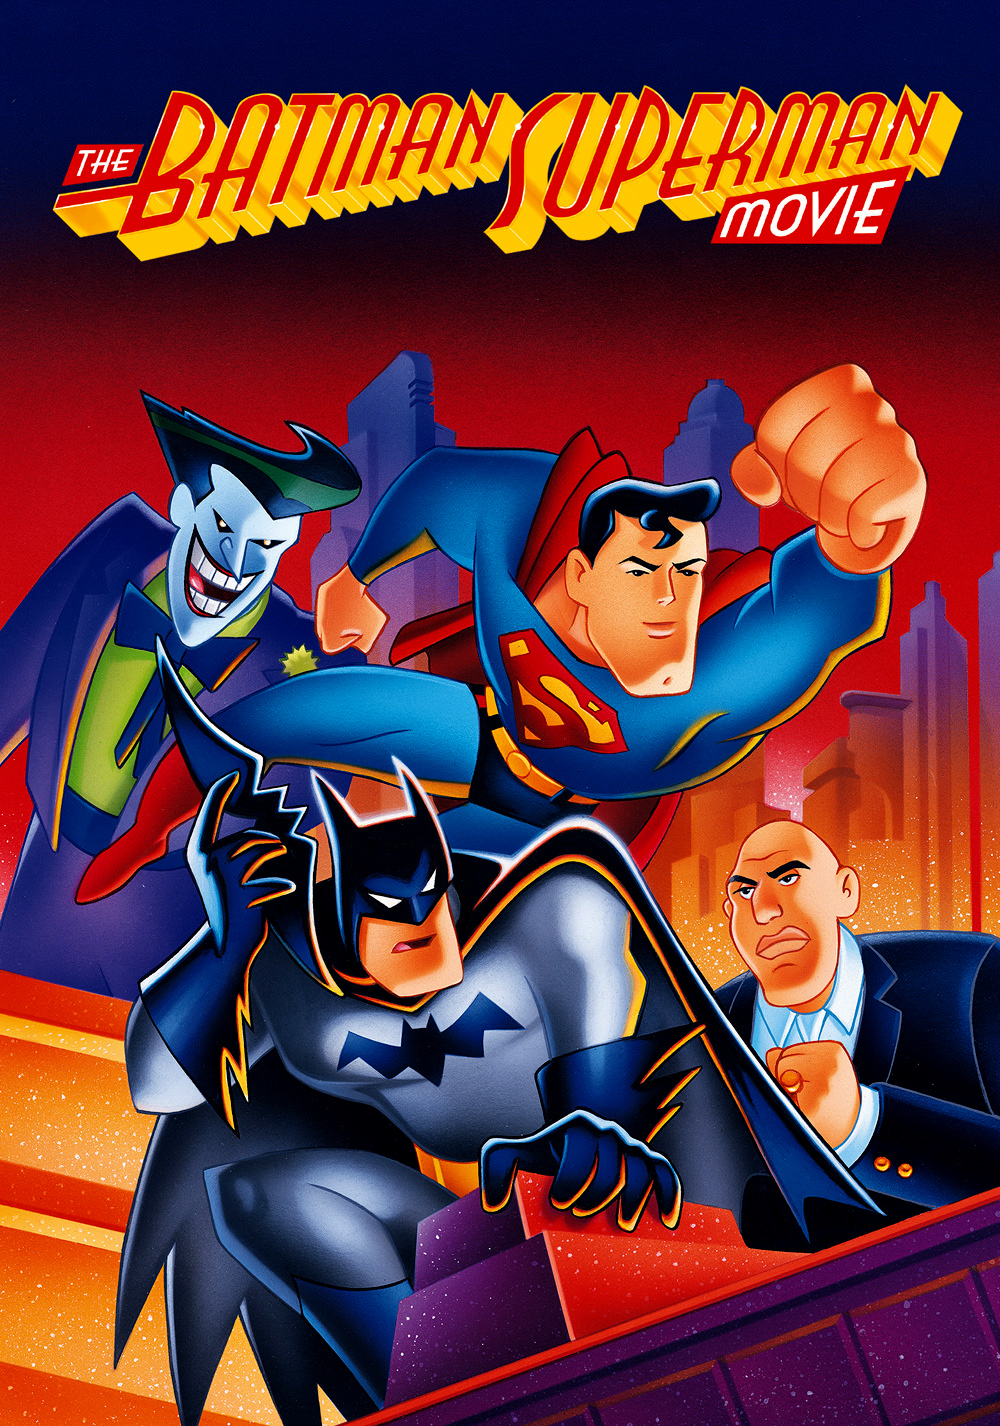 The Batman Superman Movie: World's Finest | Superman Wiki | Fandom